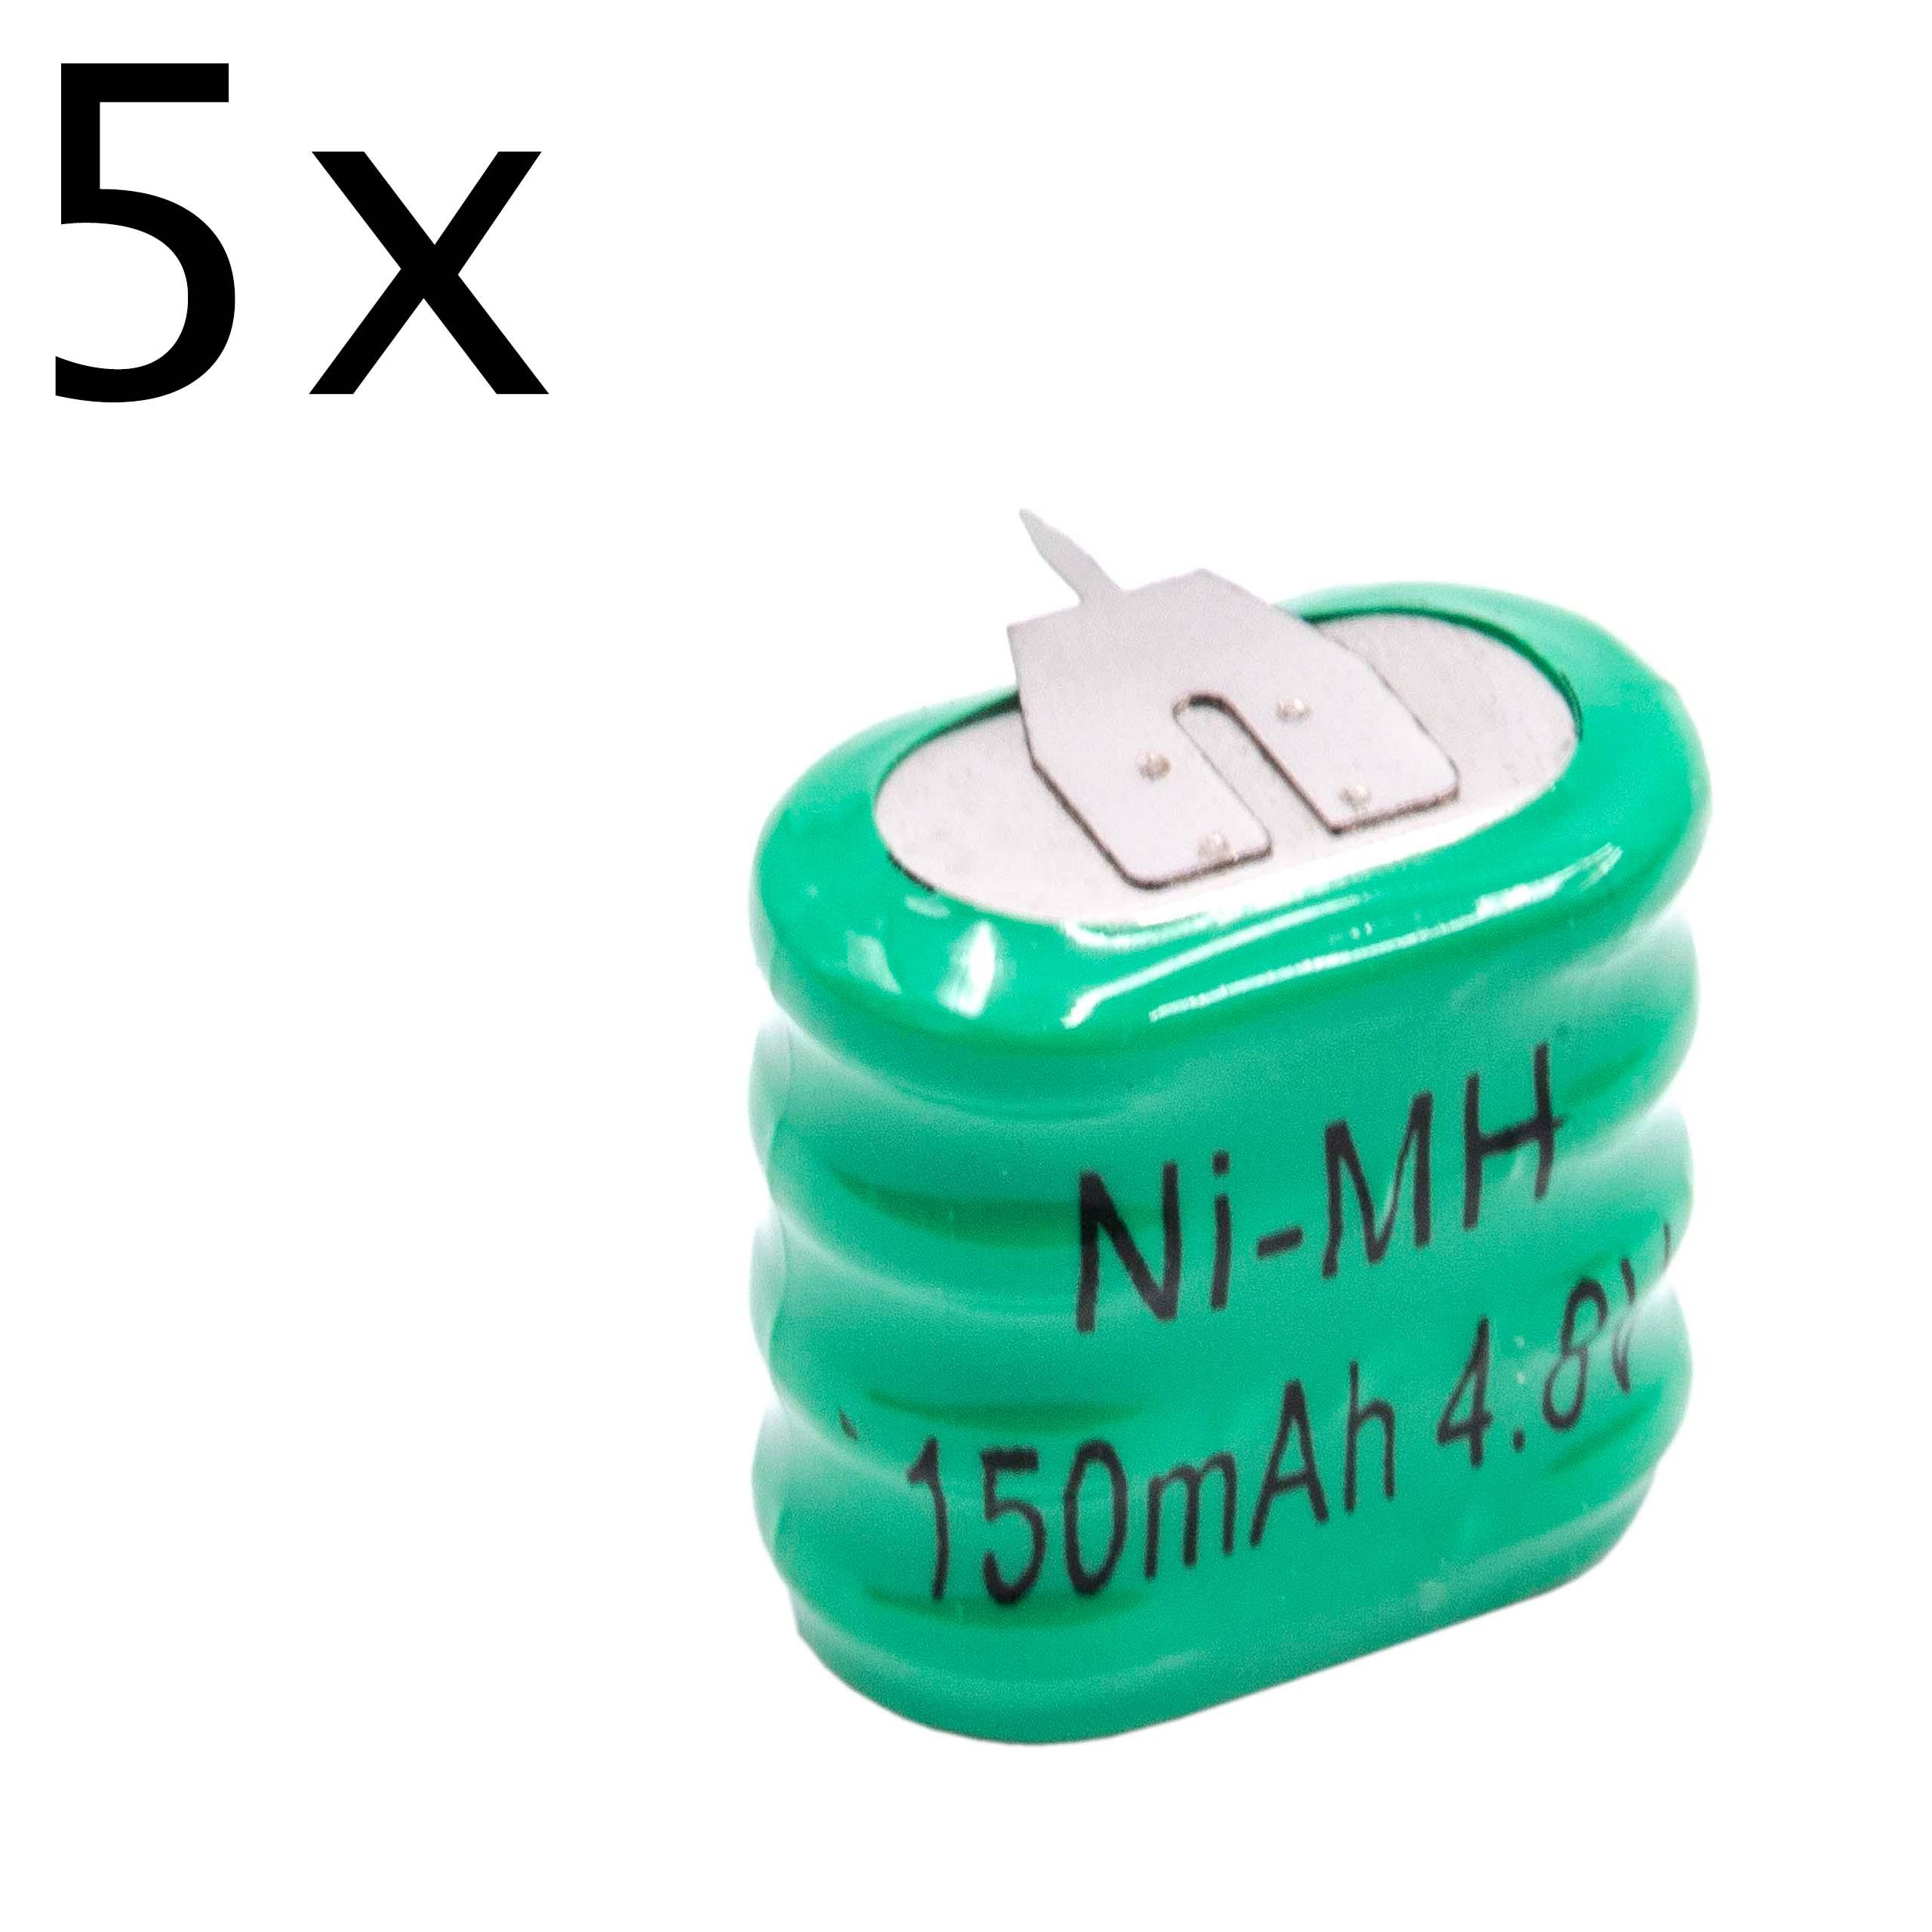 5x Akumulator guzikowy (4x ogniwo) typ 3 pin do modeli, lamp solarnych itp. zamiennik - 150 mAh 4,8 V NiMH